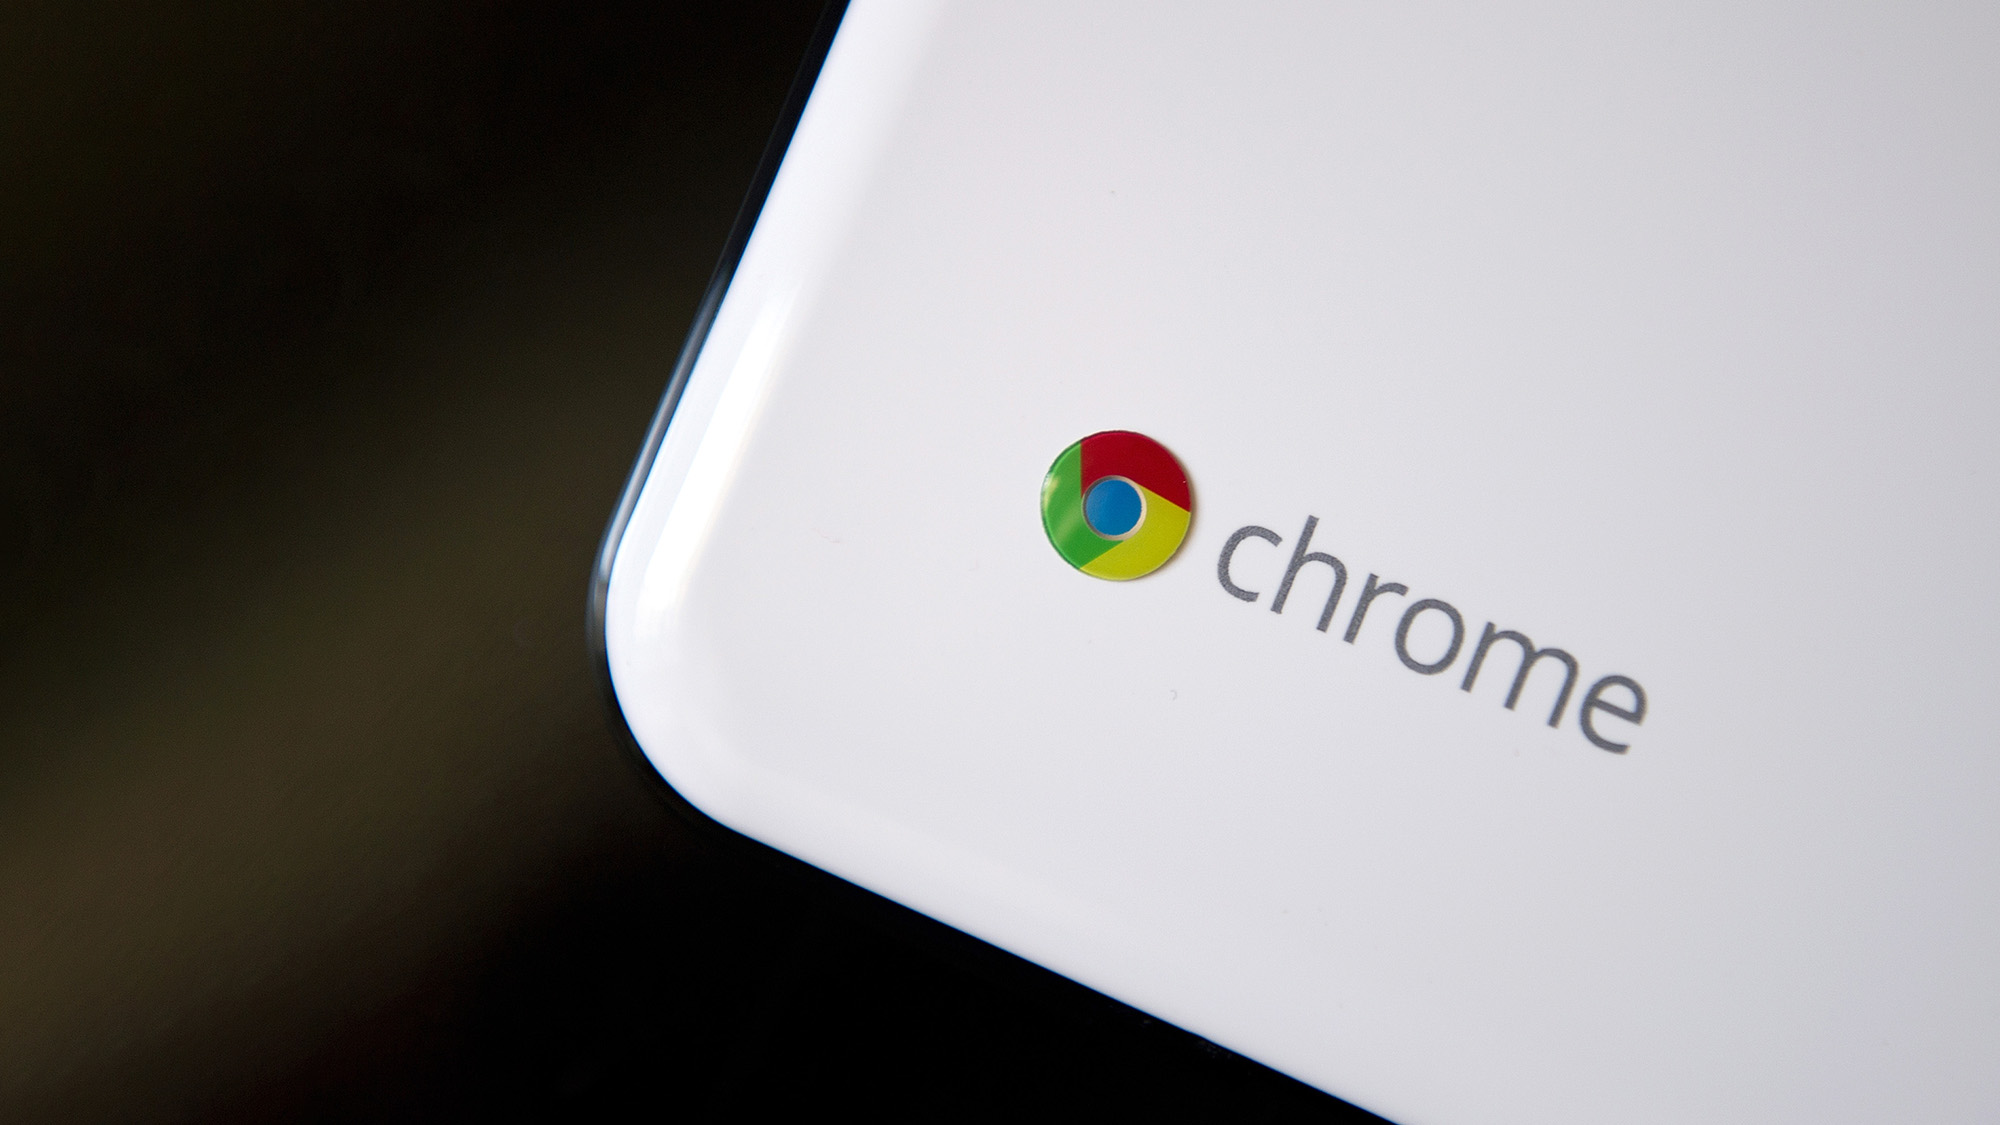 A close-up of the Chrome logo on a Chromebook